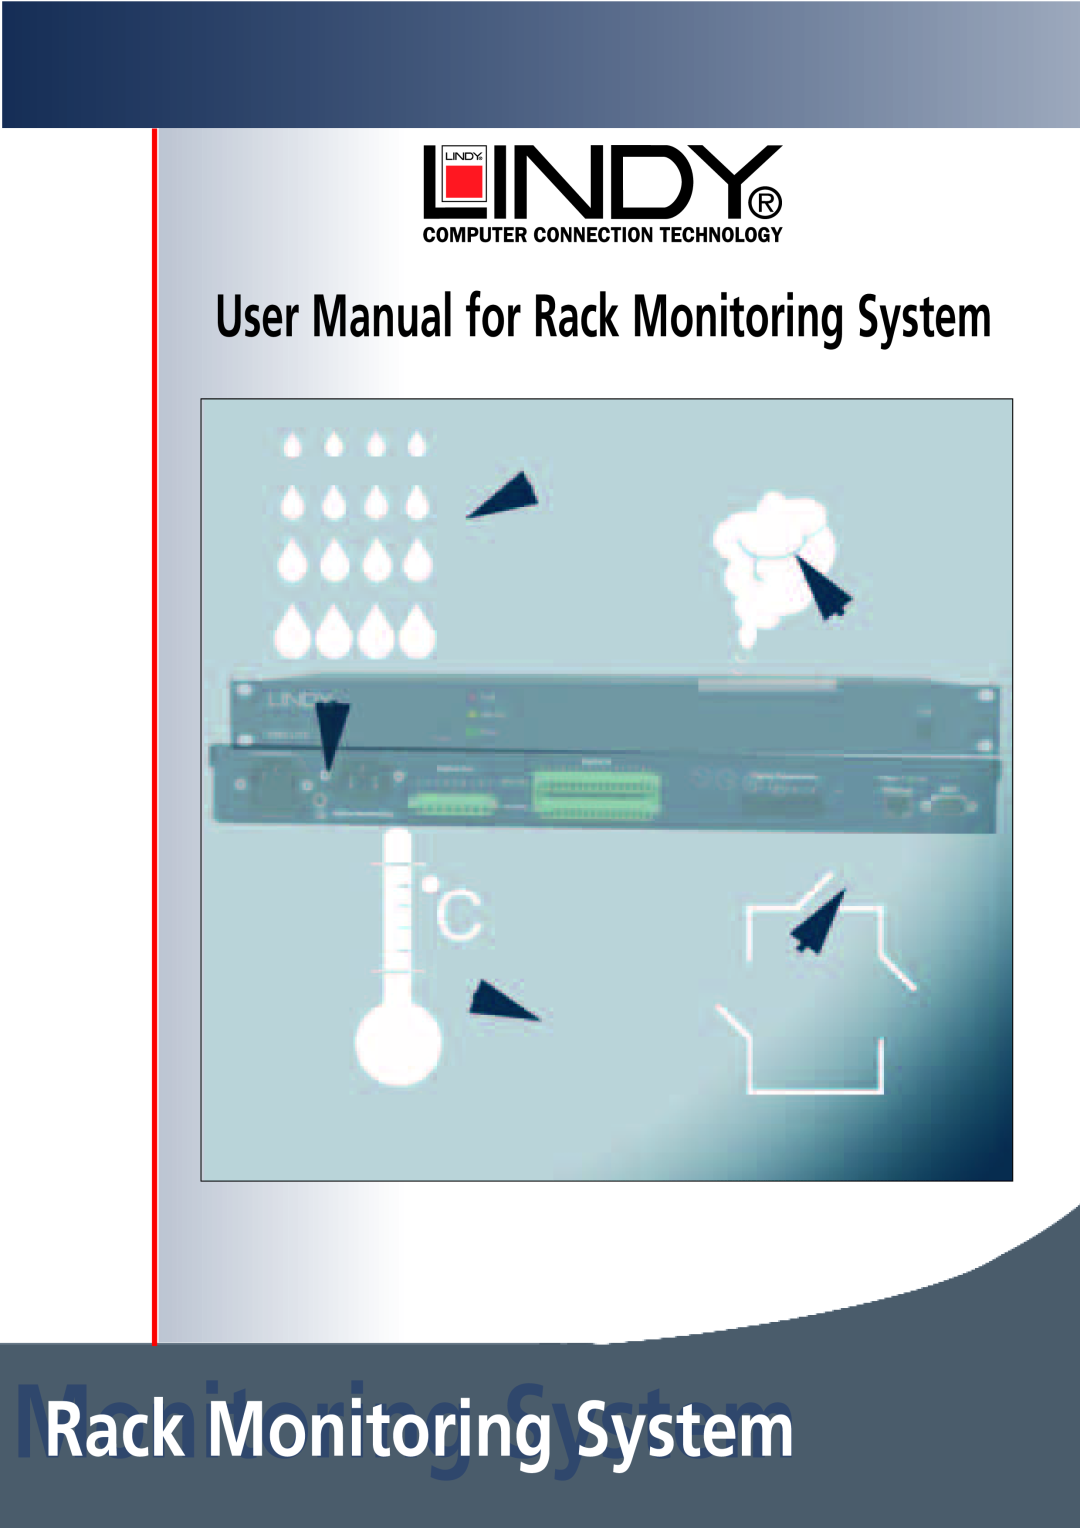 Lindy Carbon Monoxide Alarm user manual MonitoringRack MonitoringSystemSystem, User Manual for Rack Monitoring System 